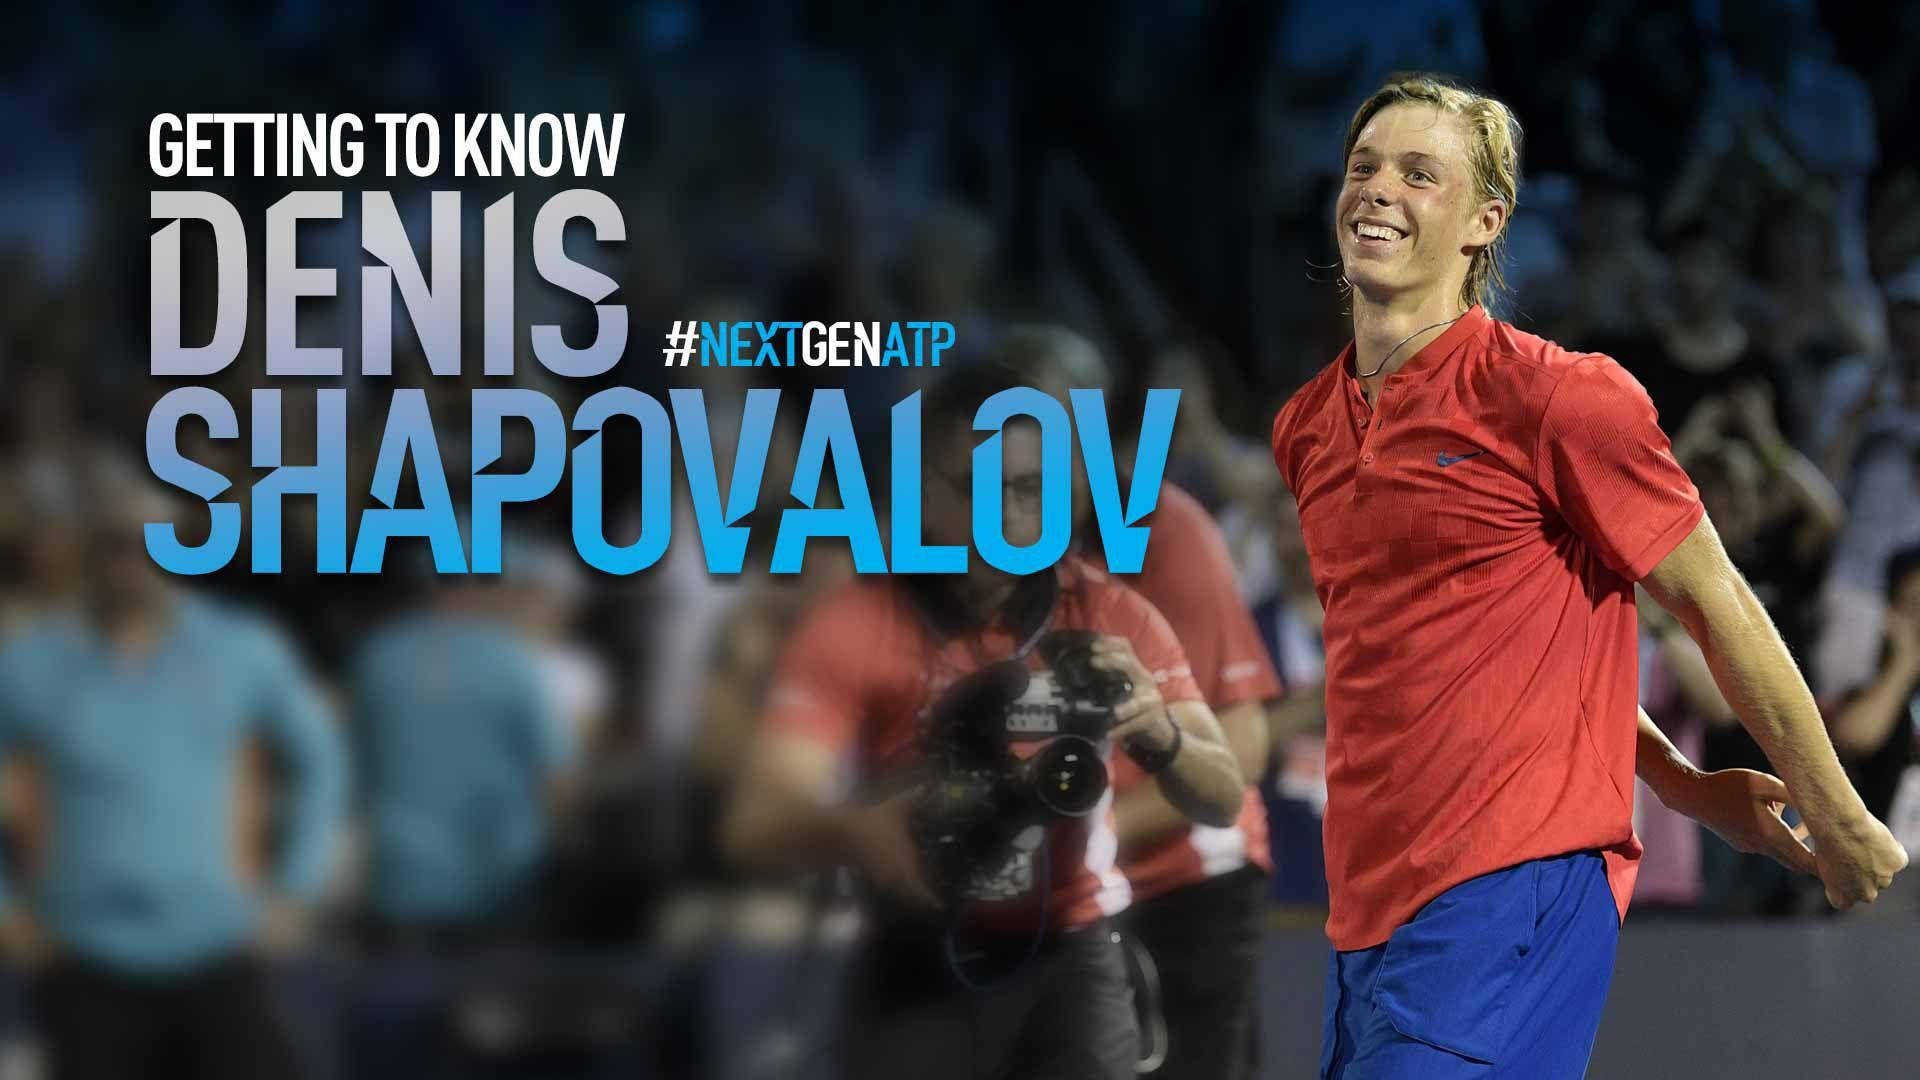 Denis Shapovalov In Action On The Tennis Court